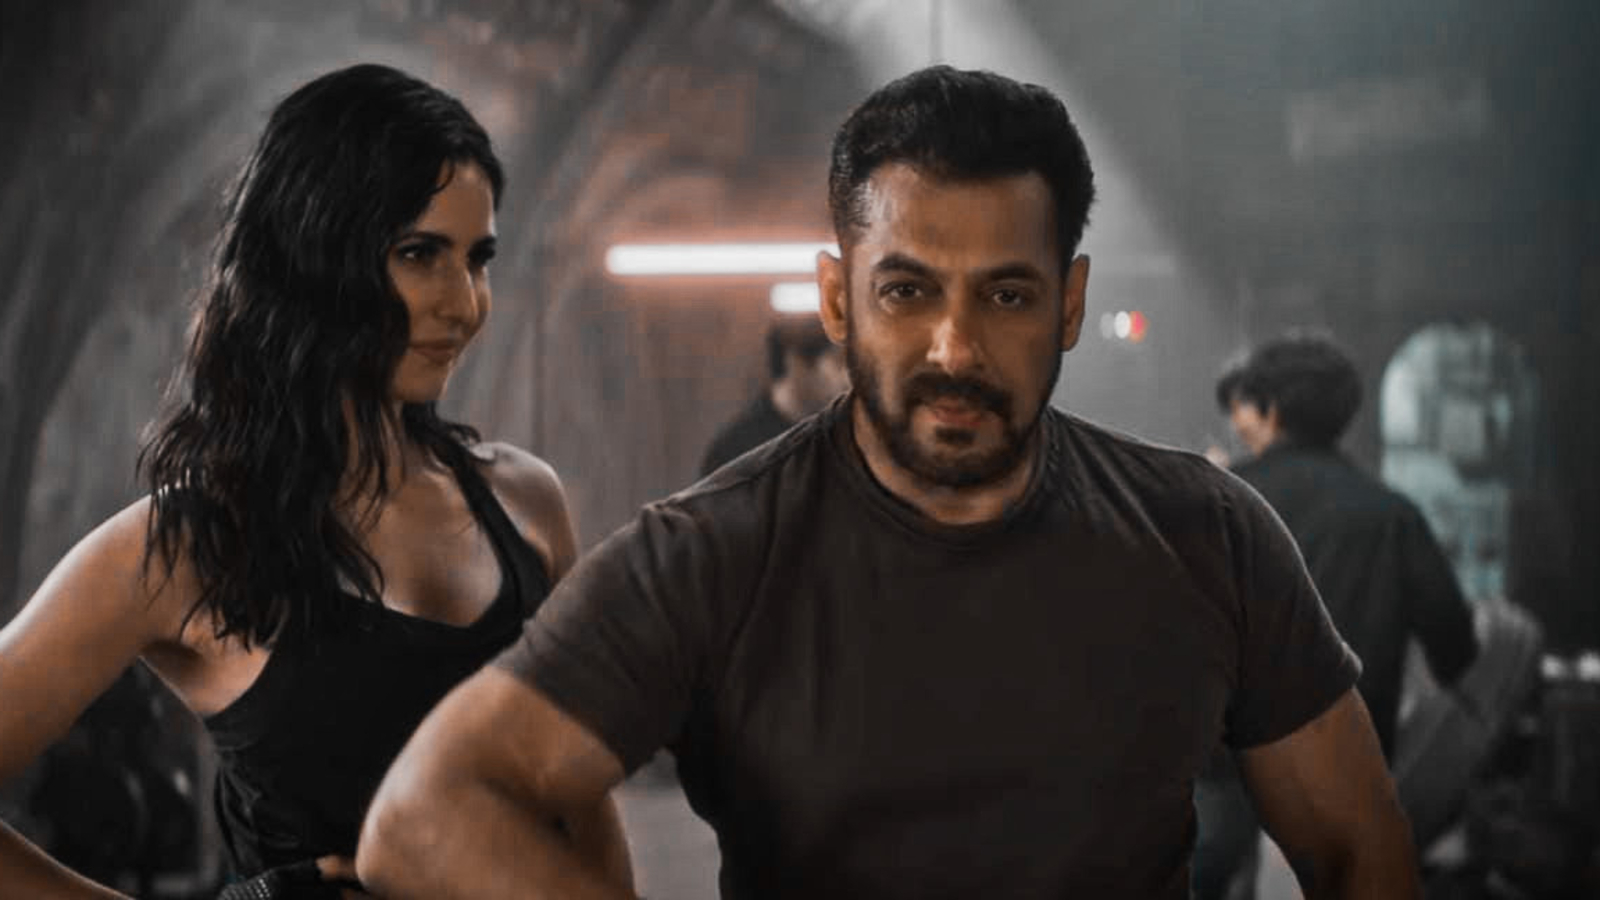 Salman Khan is even more bulked up than before in latest shirtless pic, fans say ‘bhai toh Hulk hota jaa raha hai’